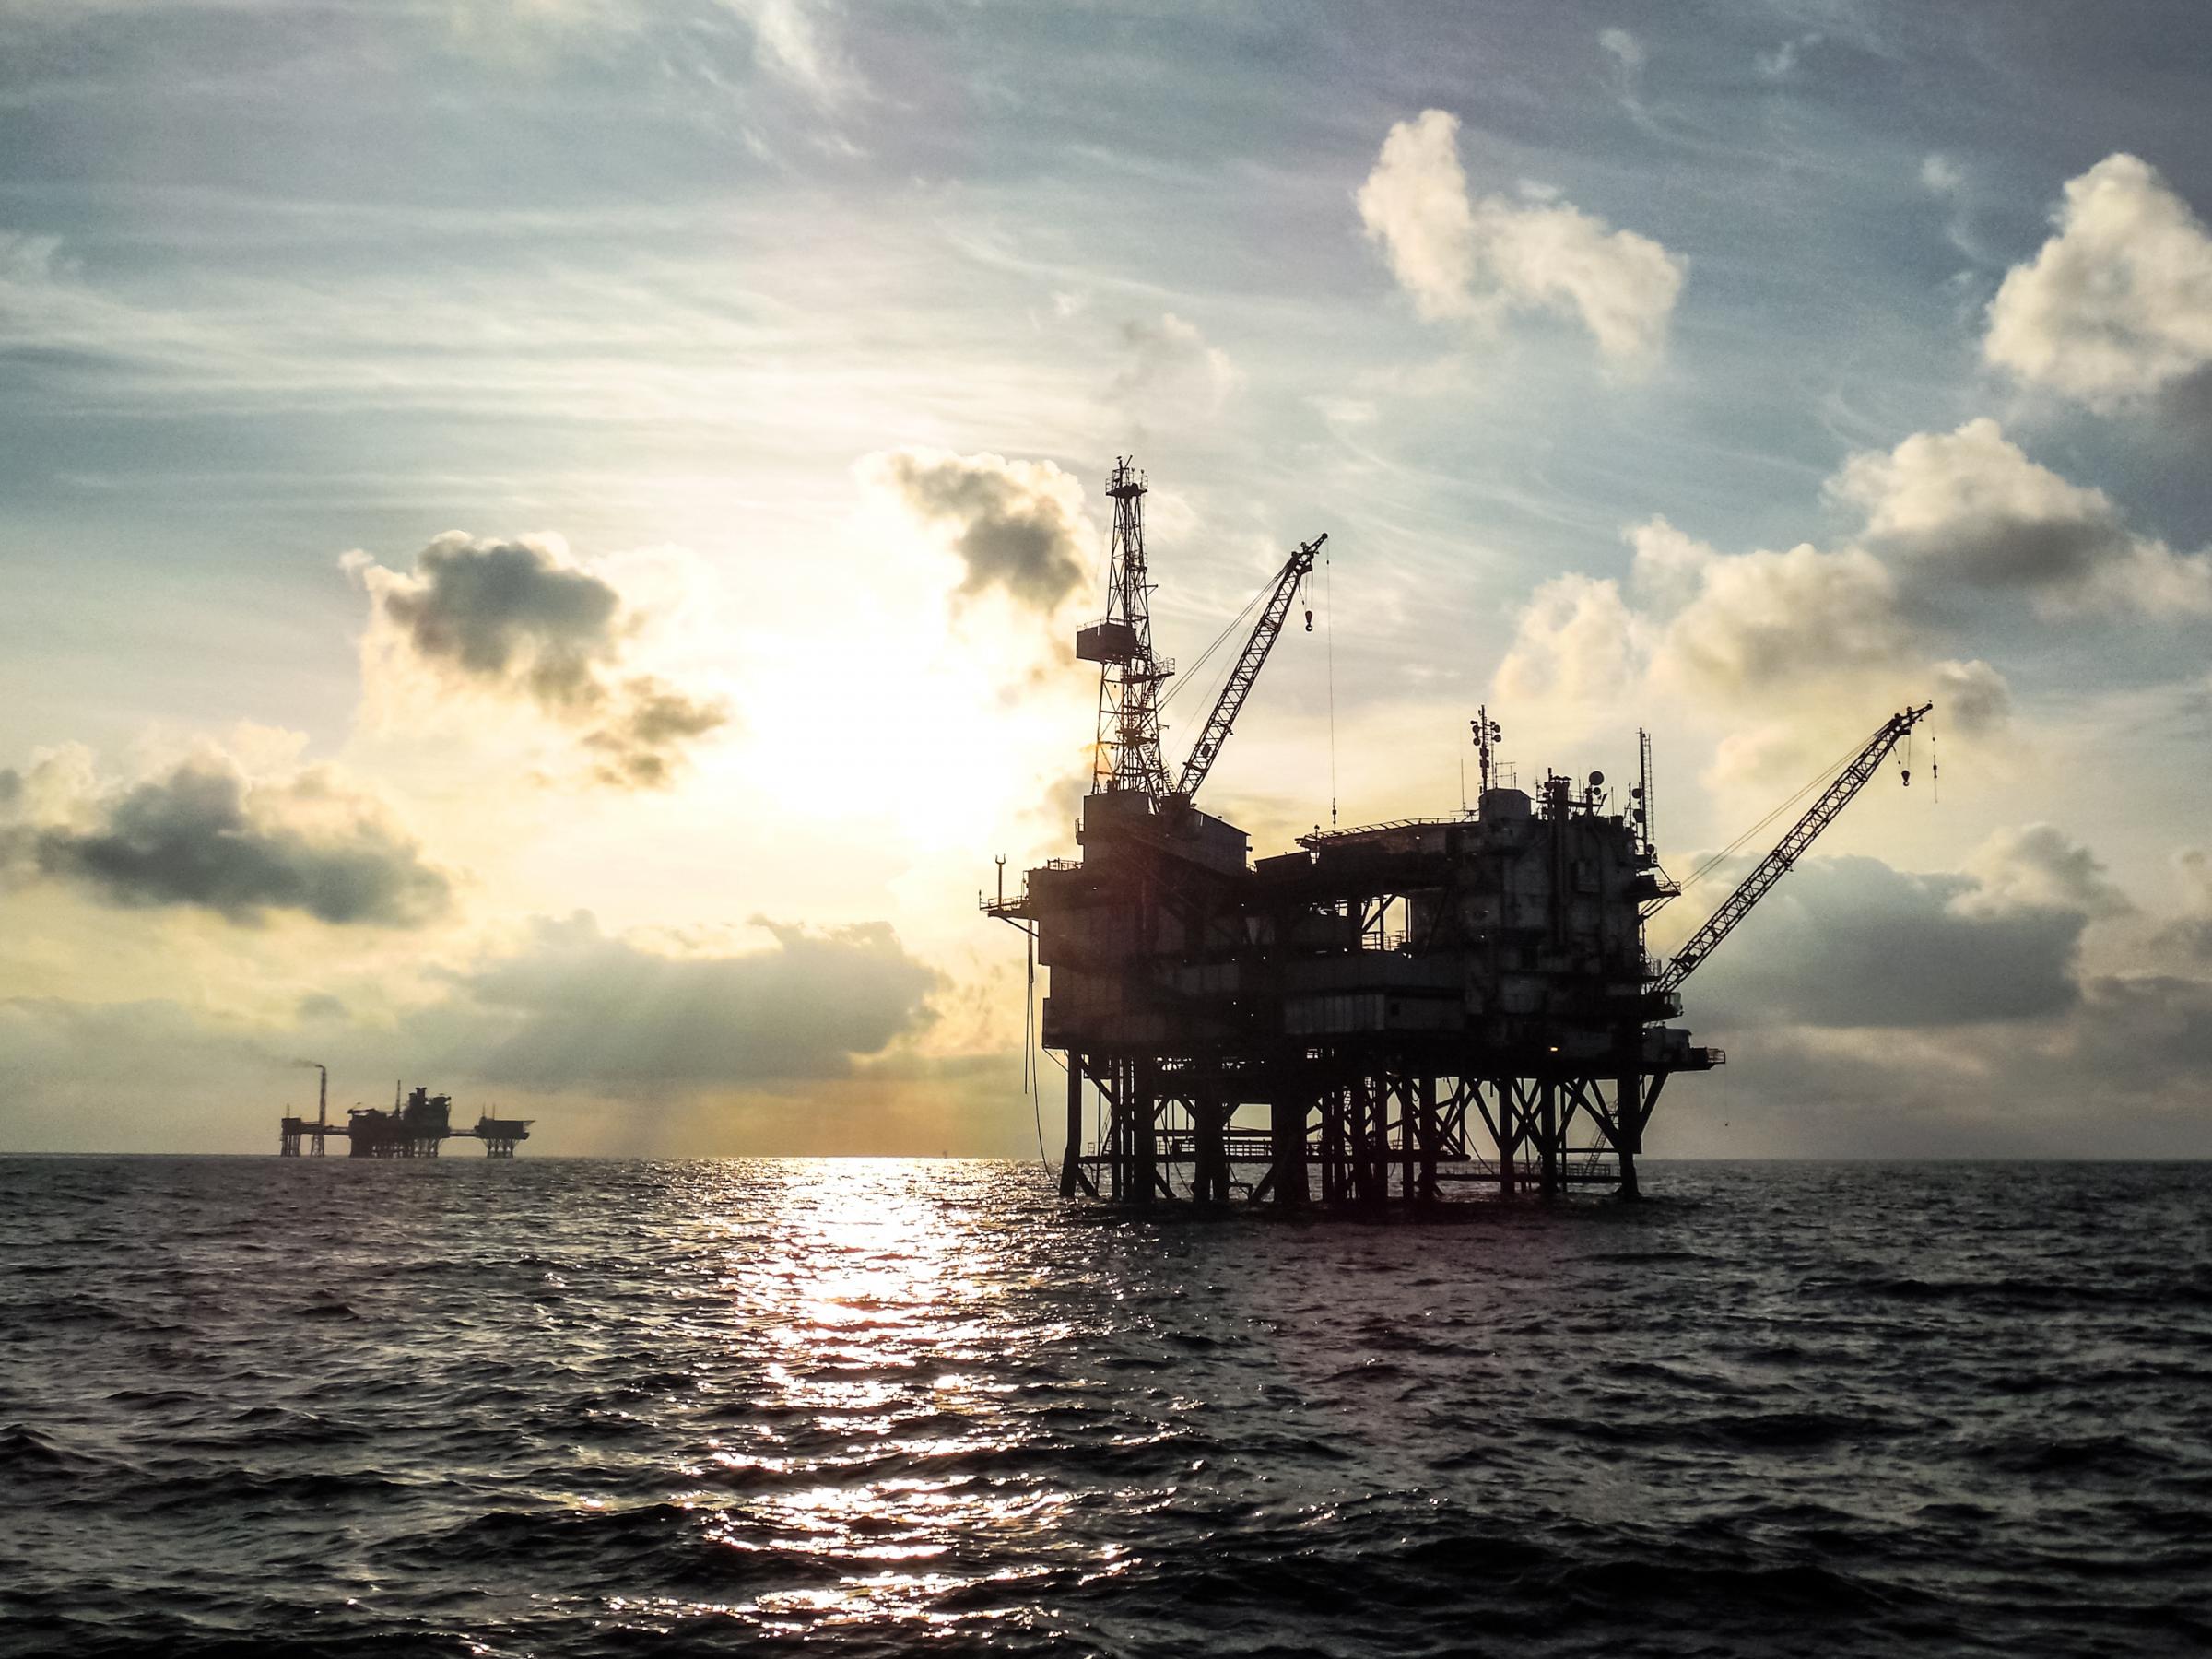 Orcadian hails oil and gas windfall tax allowance